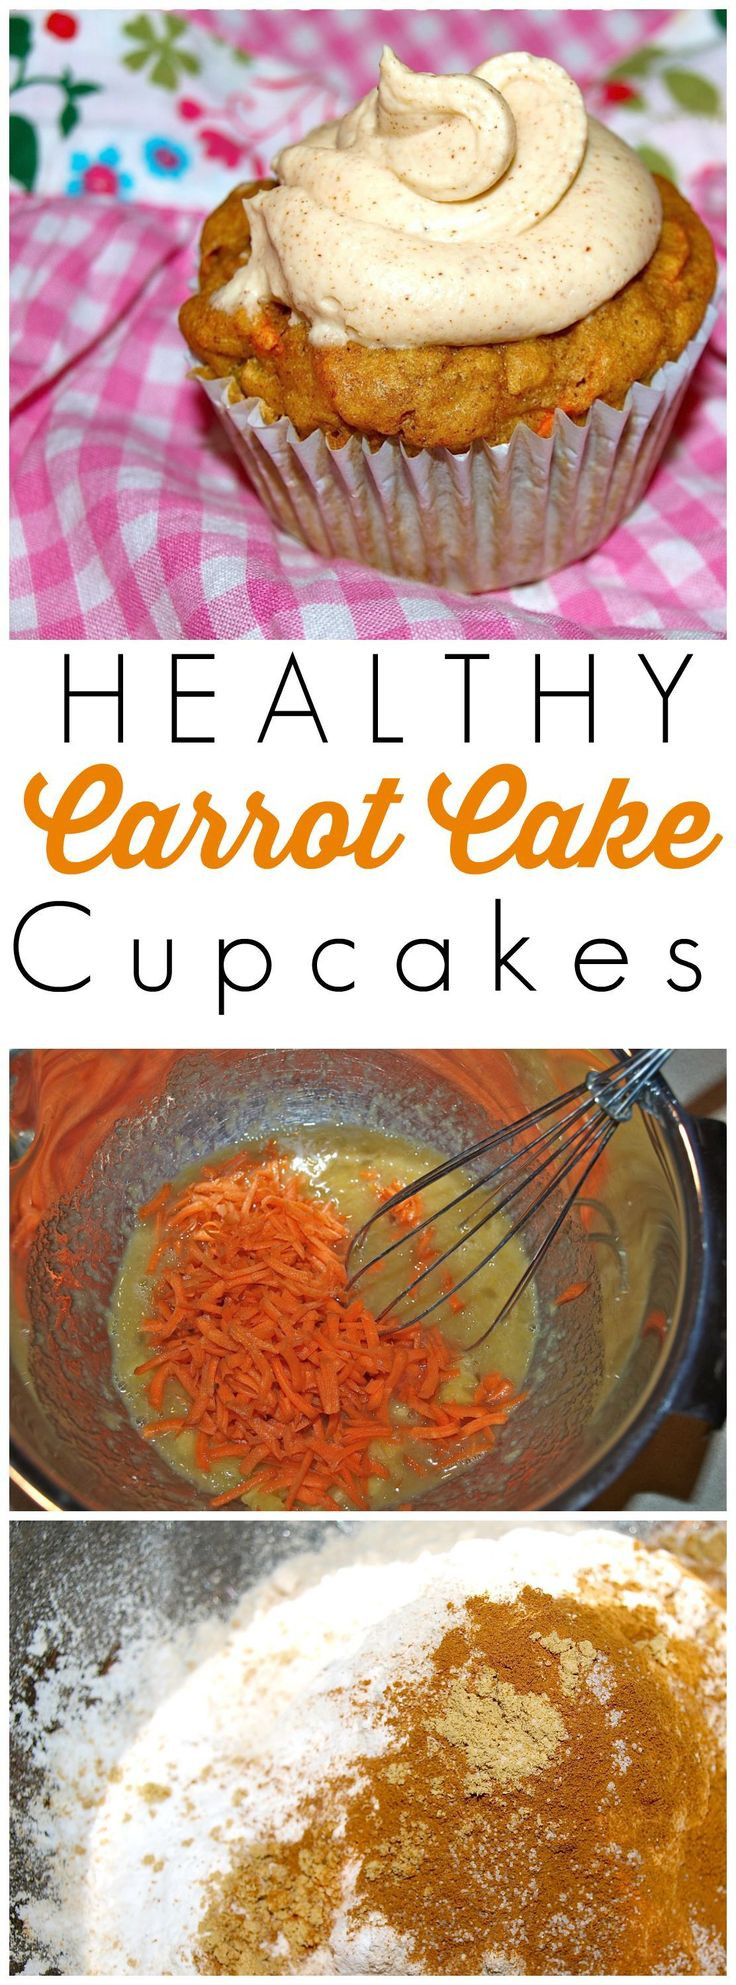 Healthy Carrot Recipes
 100 Healthy dessert recipes on Pinterest